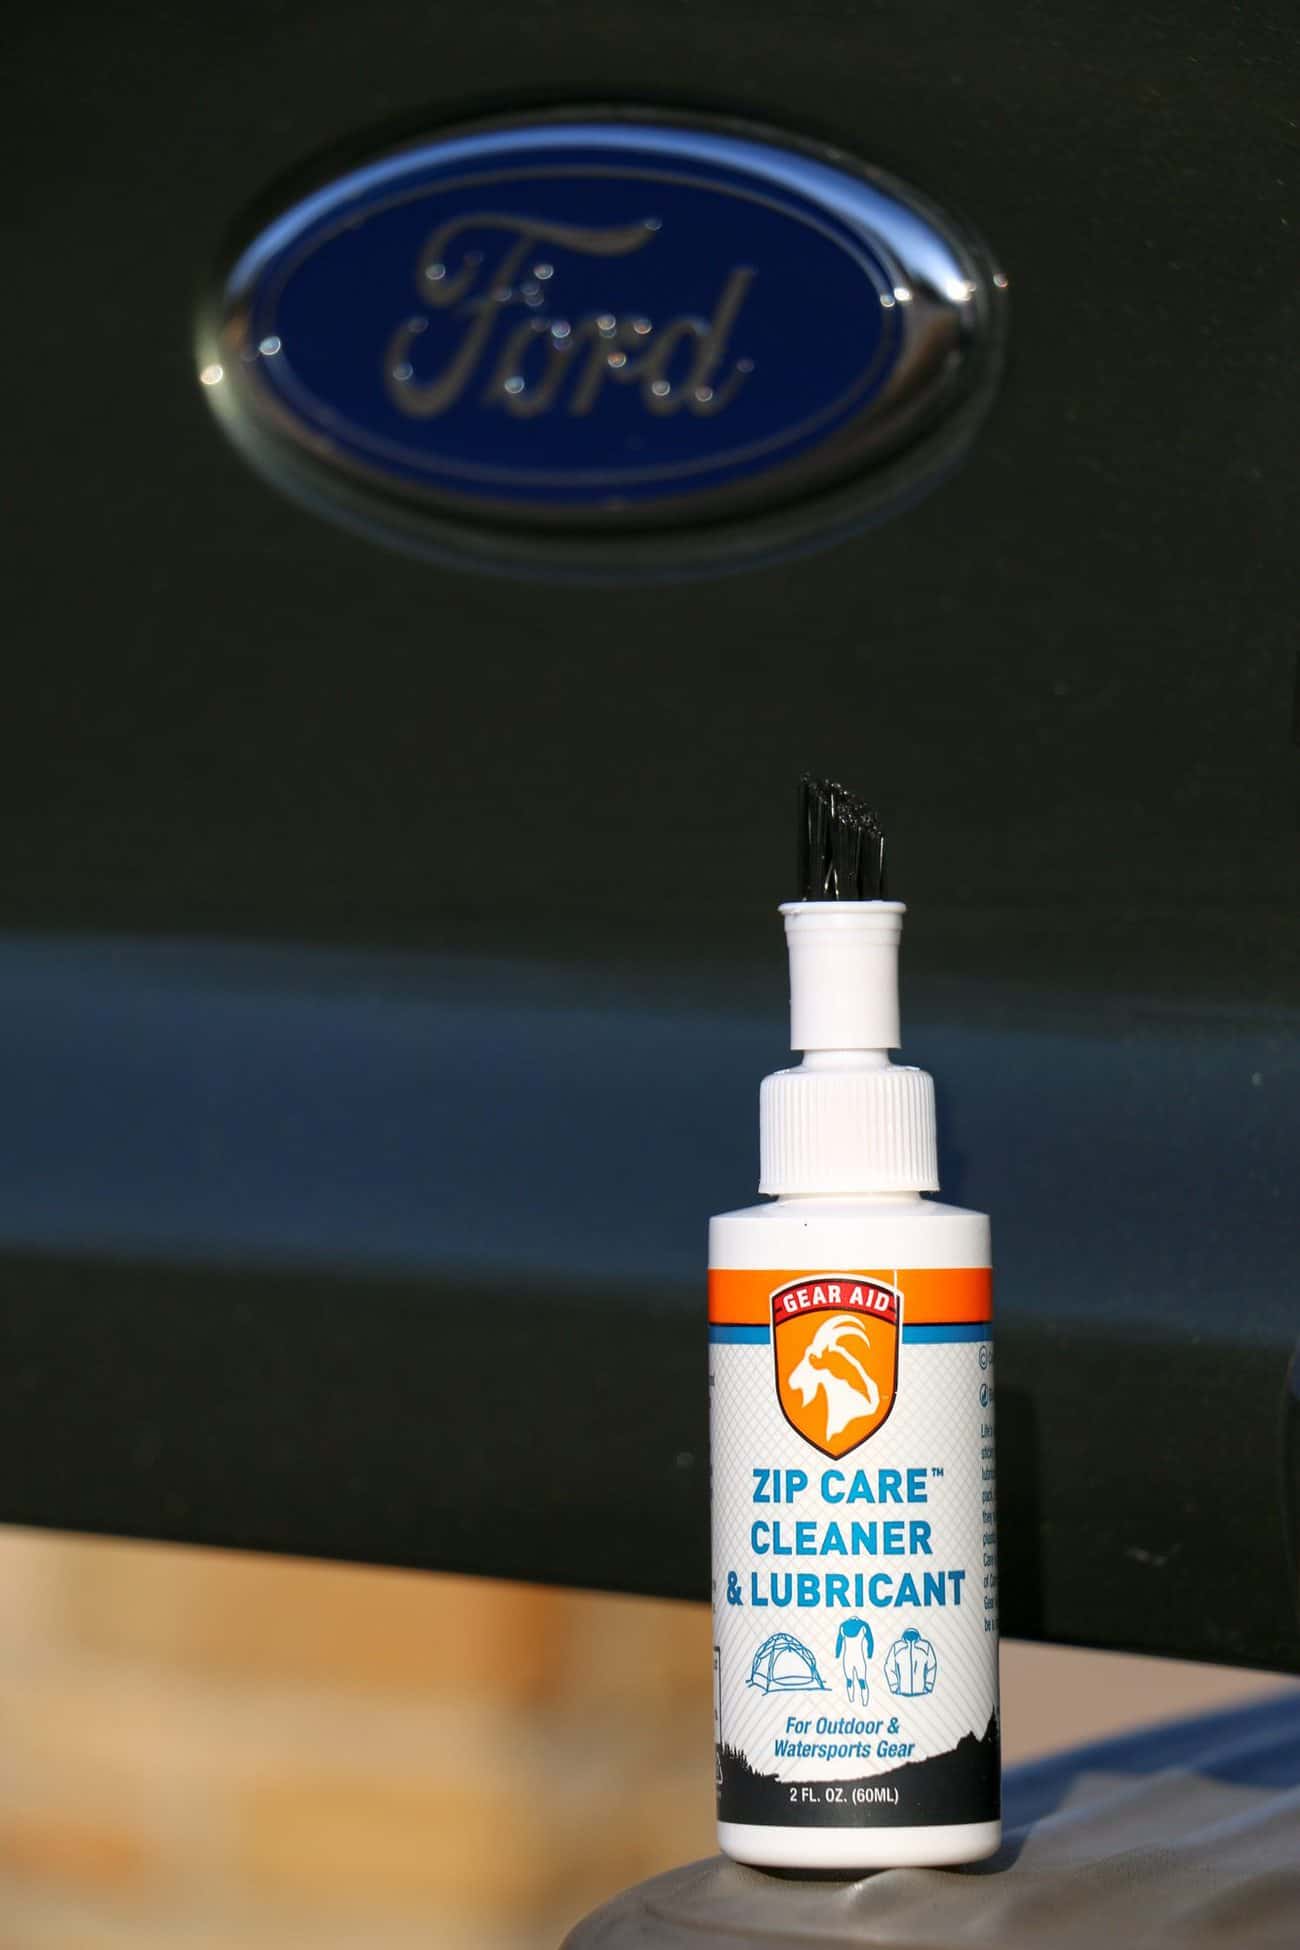 Gear Aid Zip Care - Zipper Cleaner & Lubricant